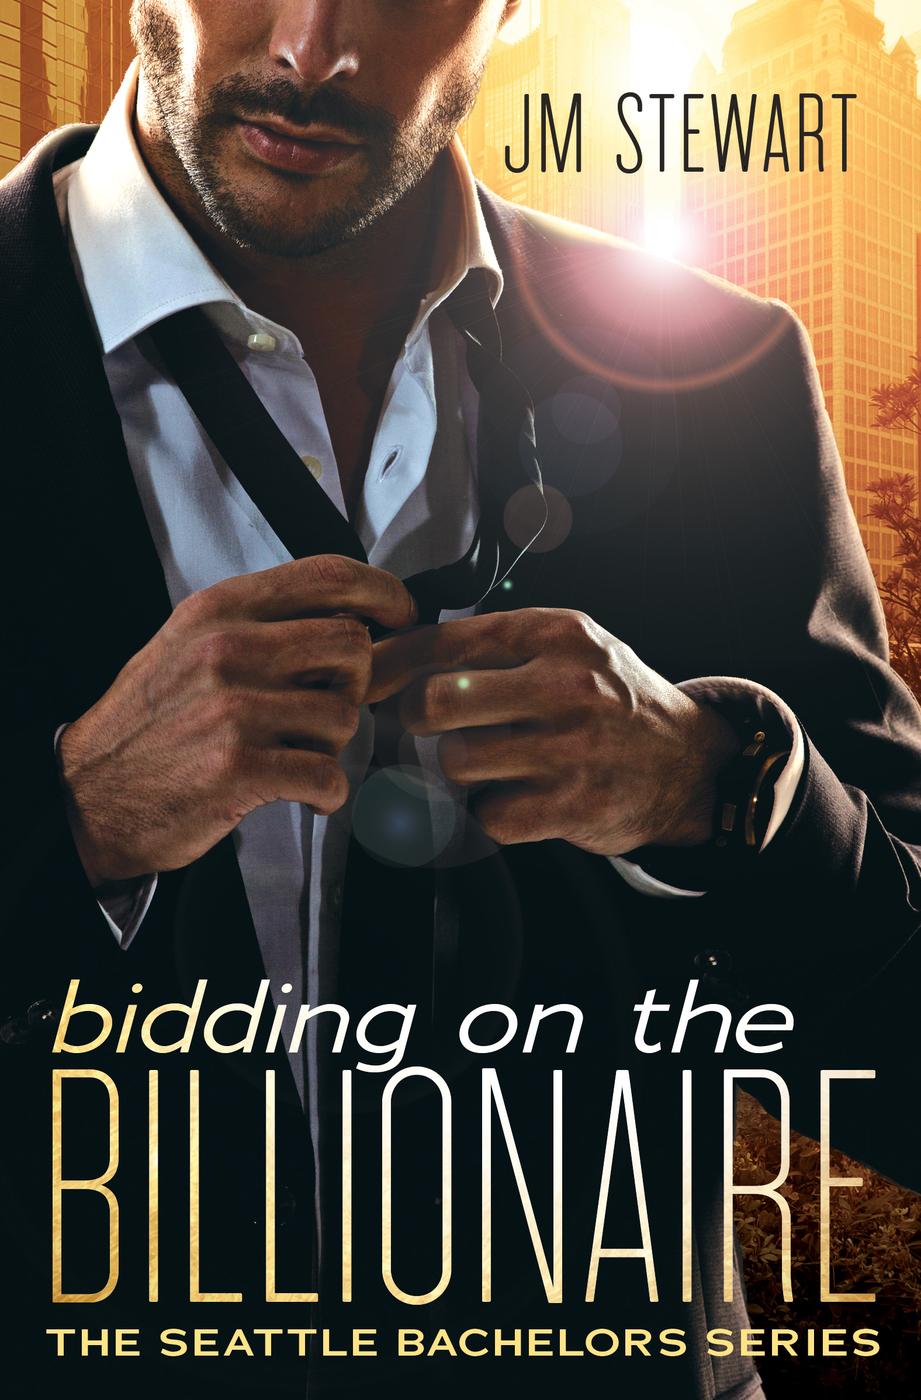 Read Bidding on the Billionaire by JM Stewart online free full book ...